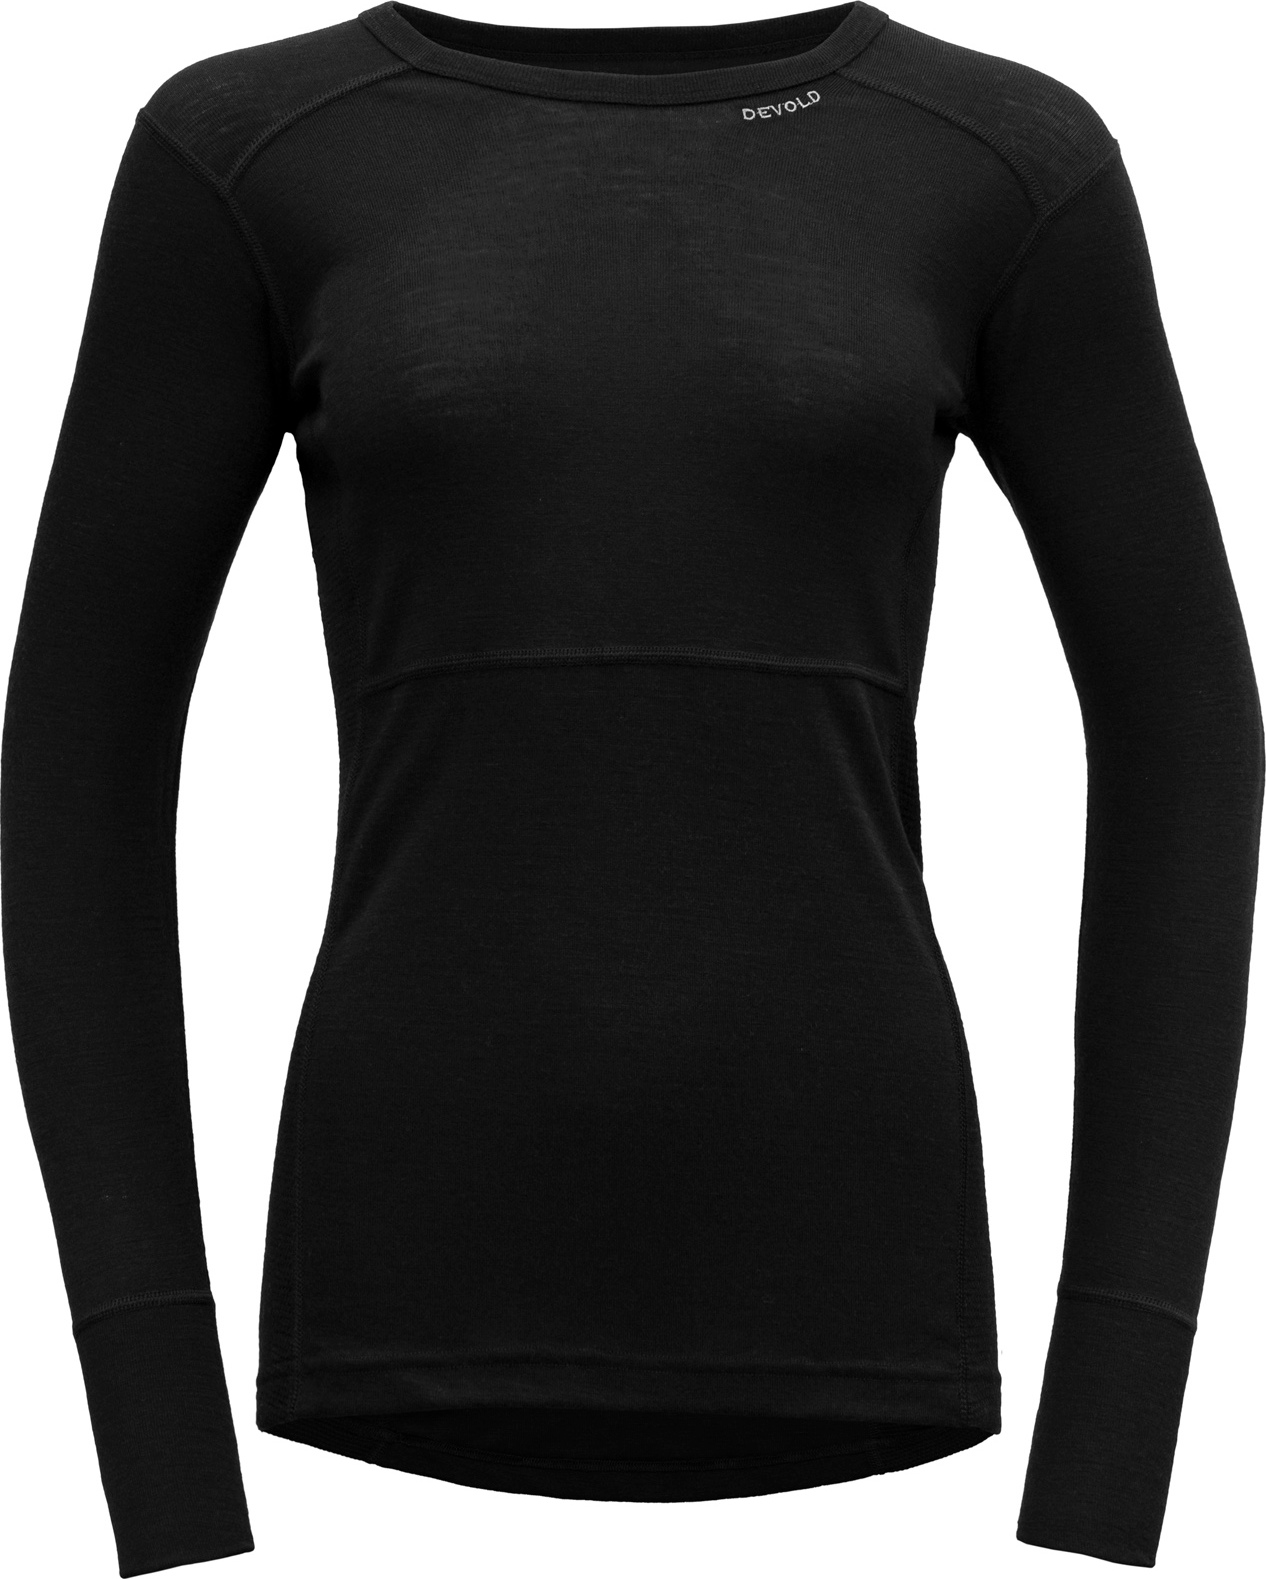 Devold Women’s Lauparen Merino 190 Shirt BLACK